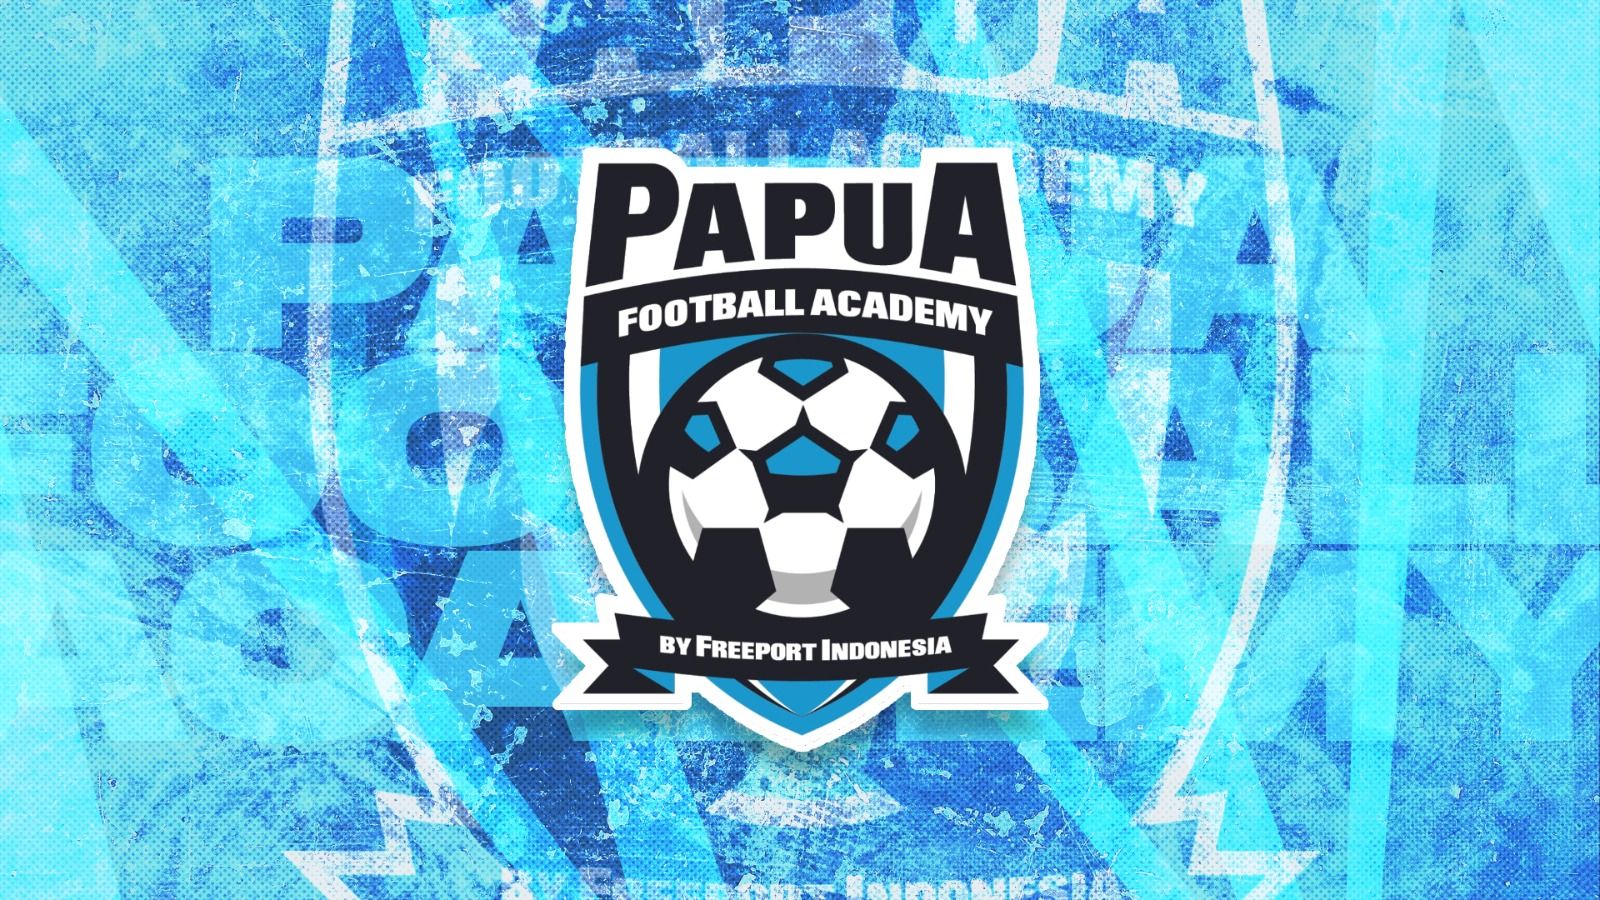 Papua Football Academy Buat Masyarakat Makin Tertib Administrasi